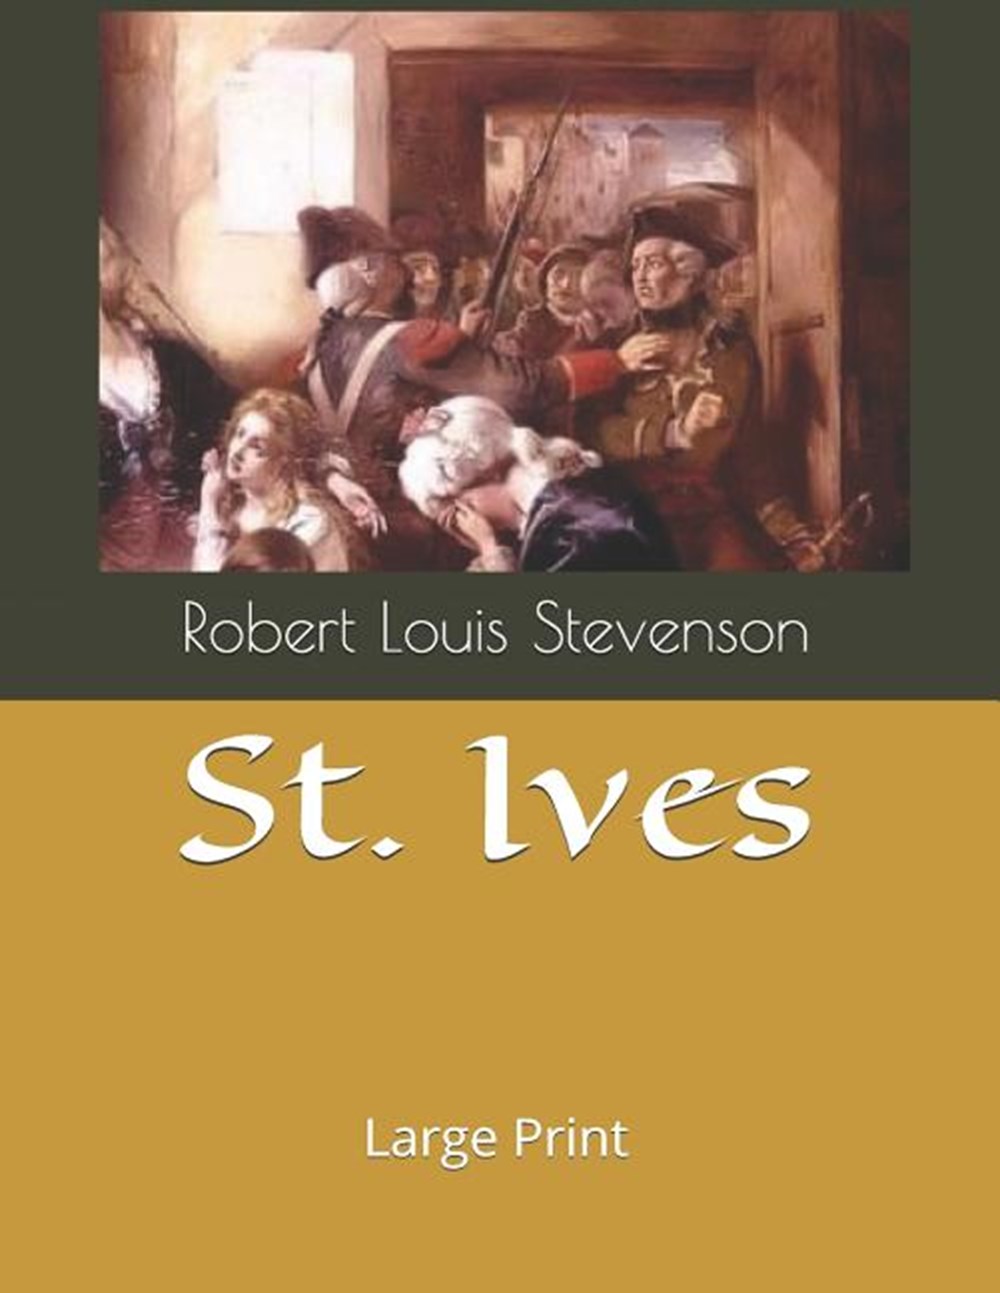 St. Ives Large Print